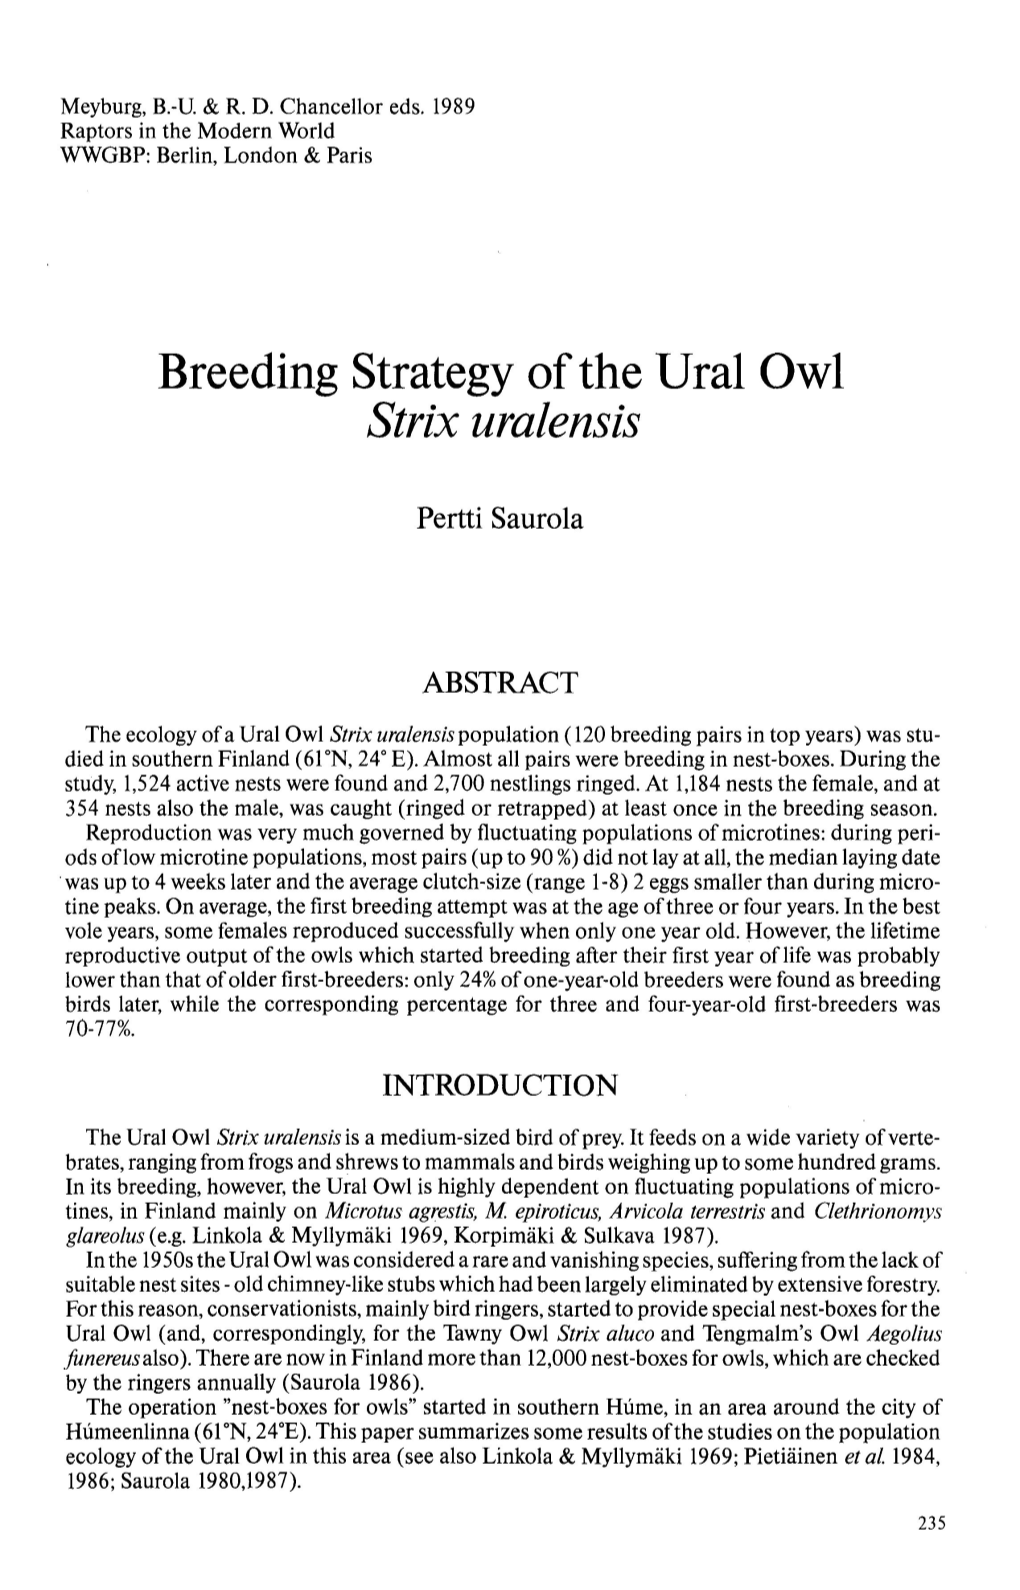 Strategy of the Ural Owl Strix Uralensis Breeding